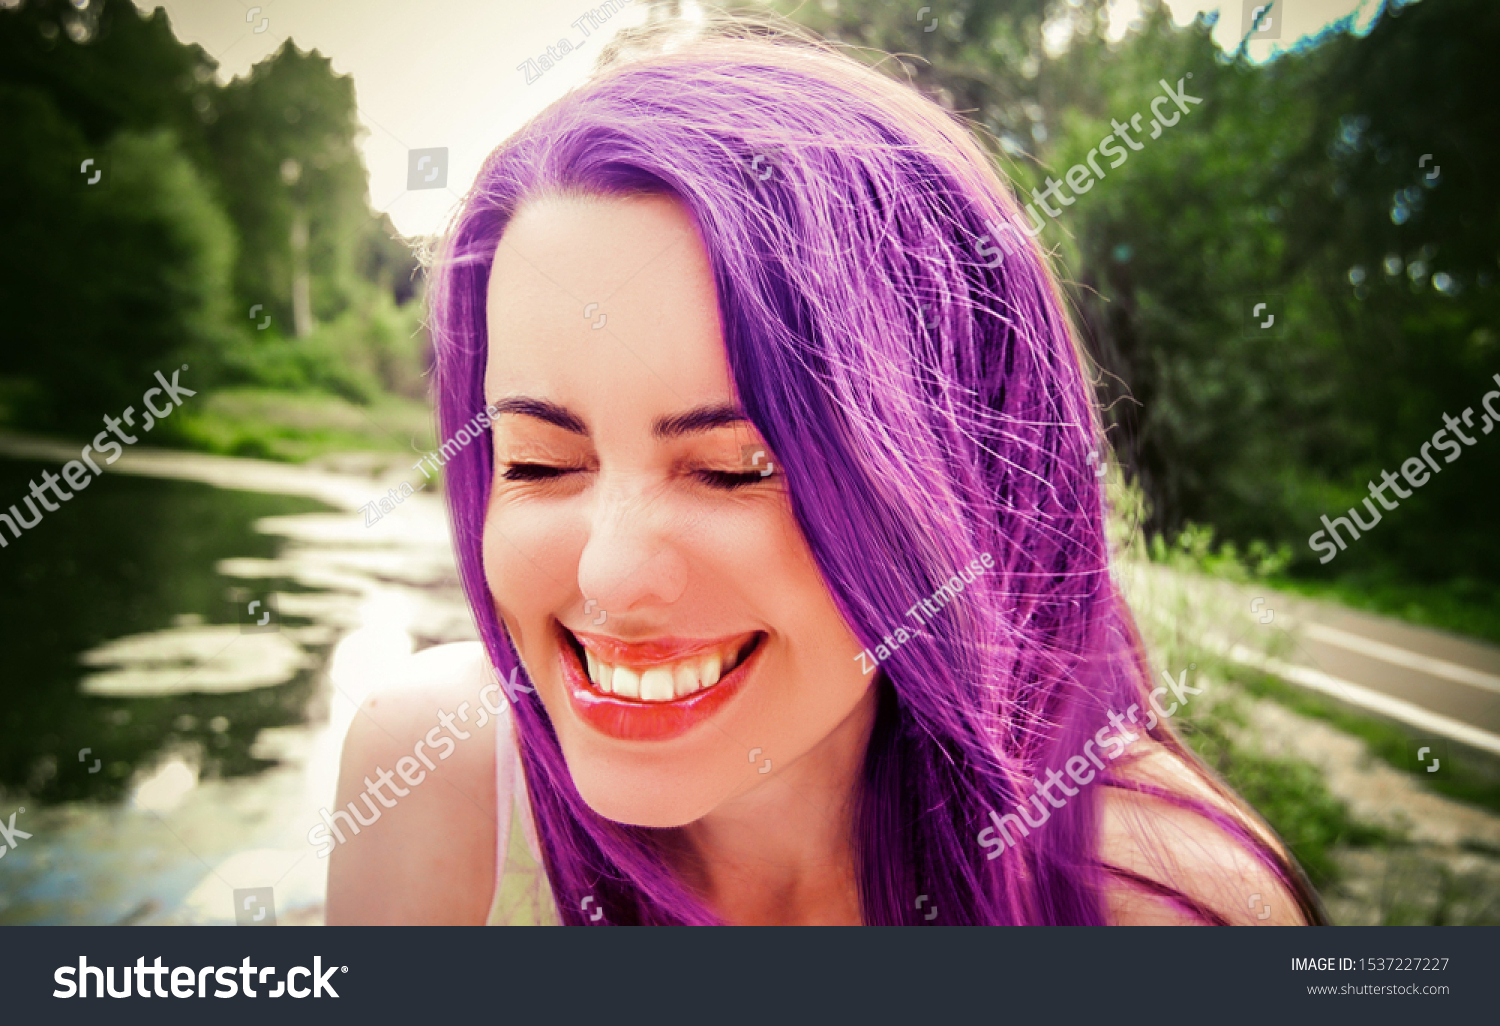 uheldigvis Logisk Prelude Young Beautiful Girl Long Violetpurple Hair Stock Photo (Edit Now)  1537227227